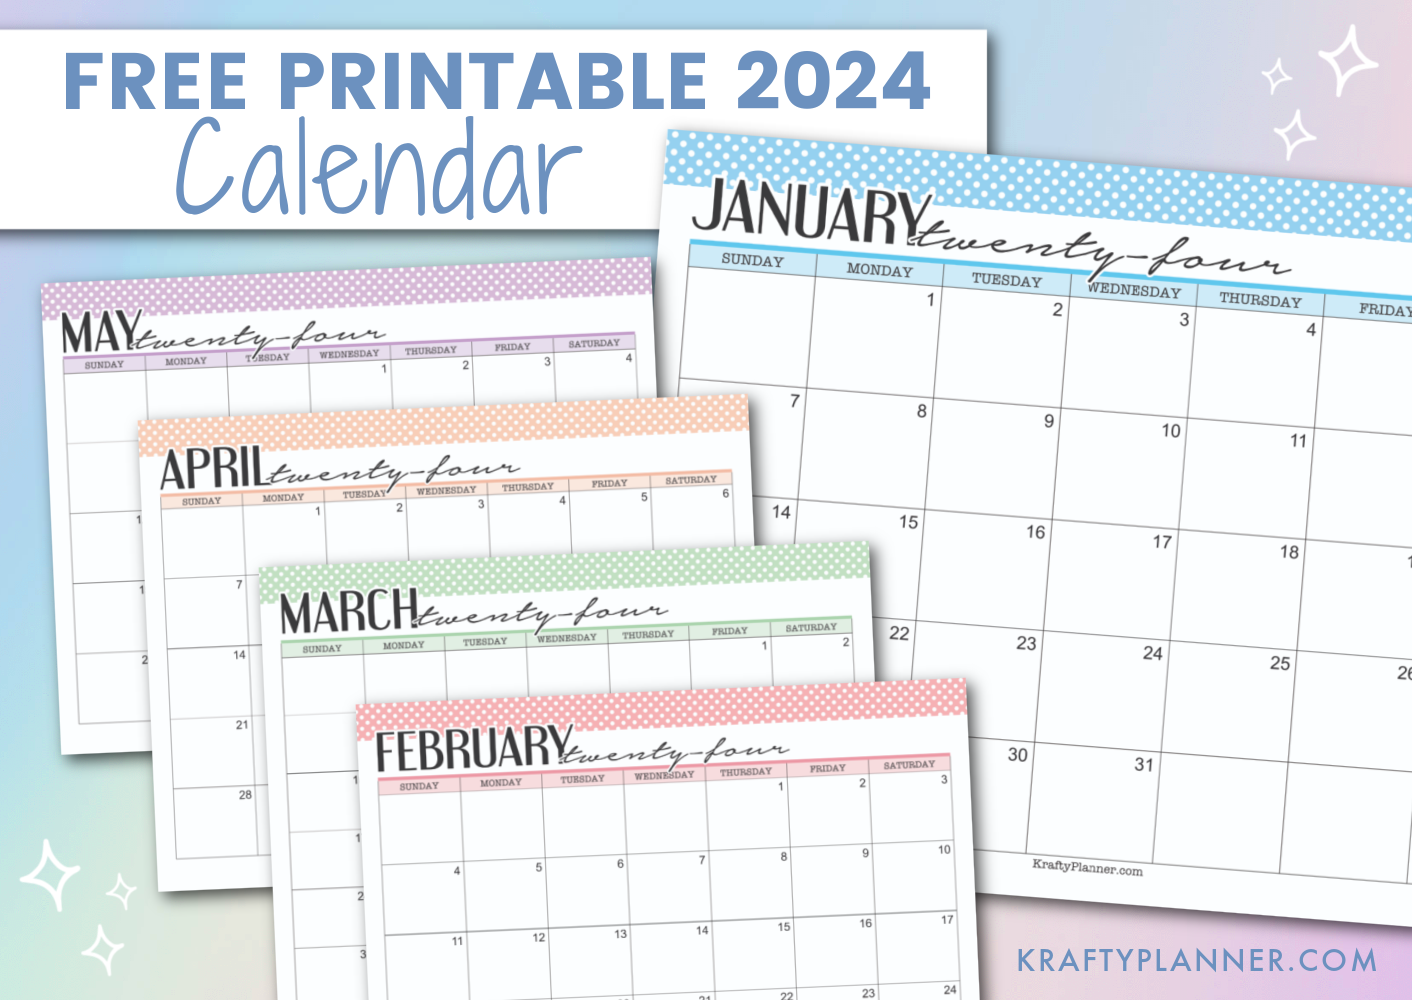 Free Printable 2024 Calendars (Color) — Krafty Planner within Free Printable Calendar 2024 Big Print